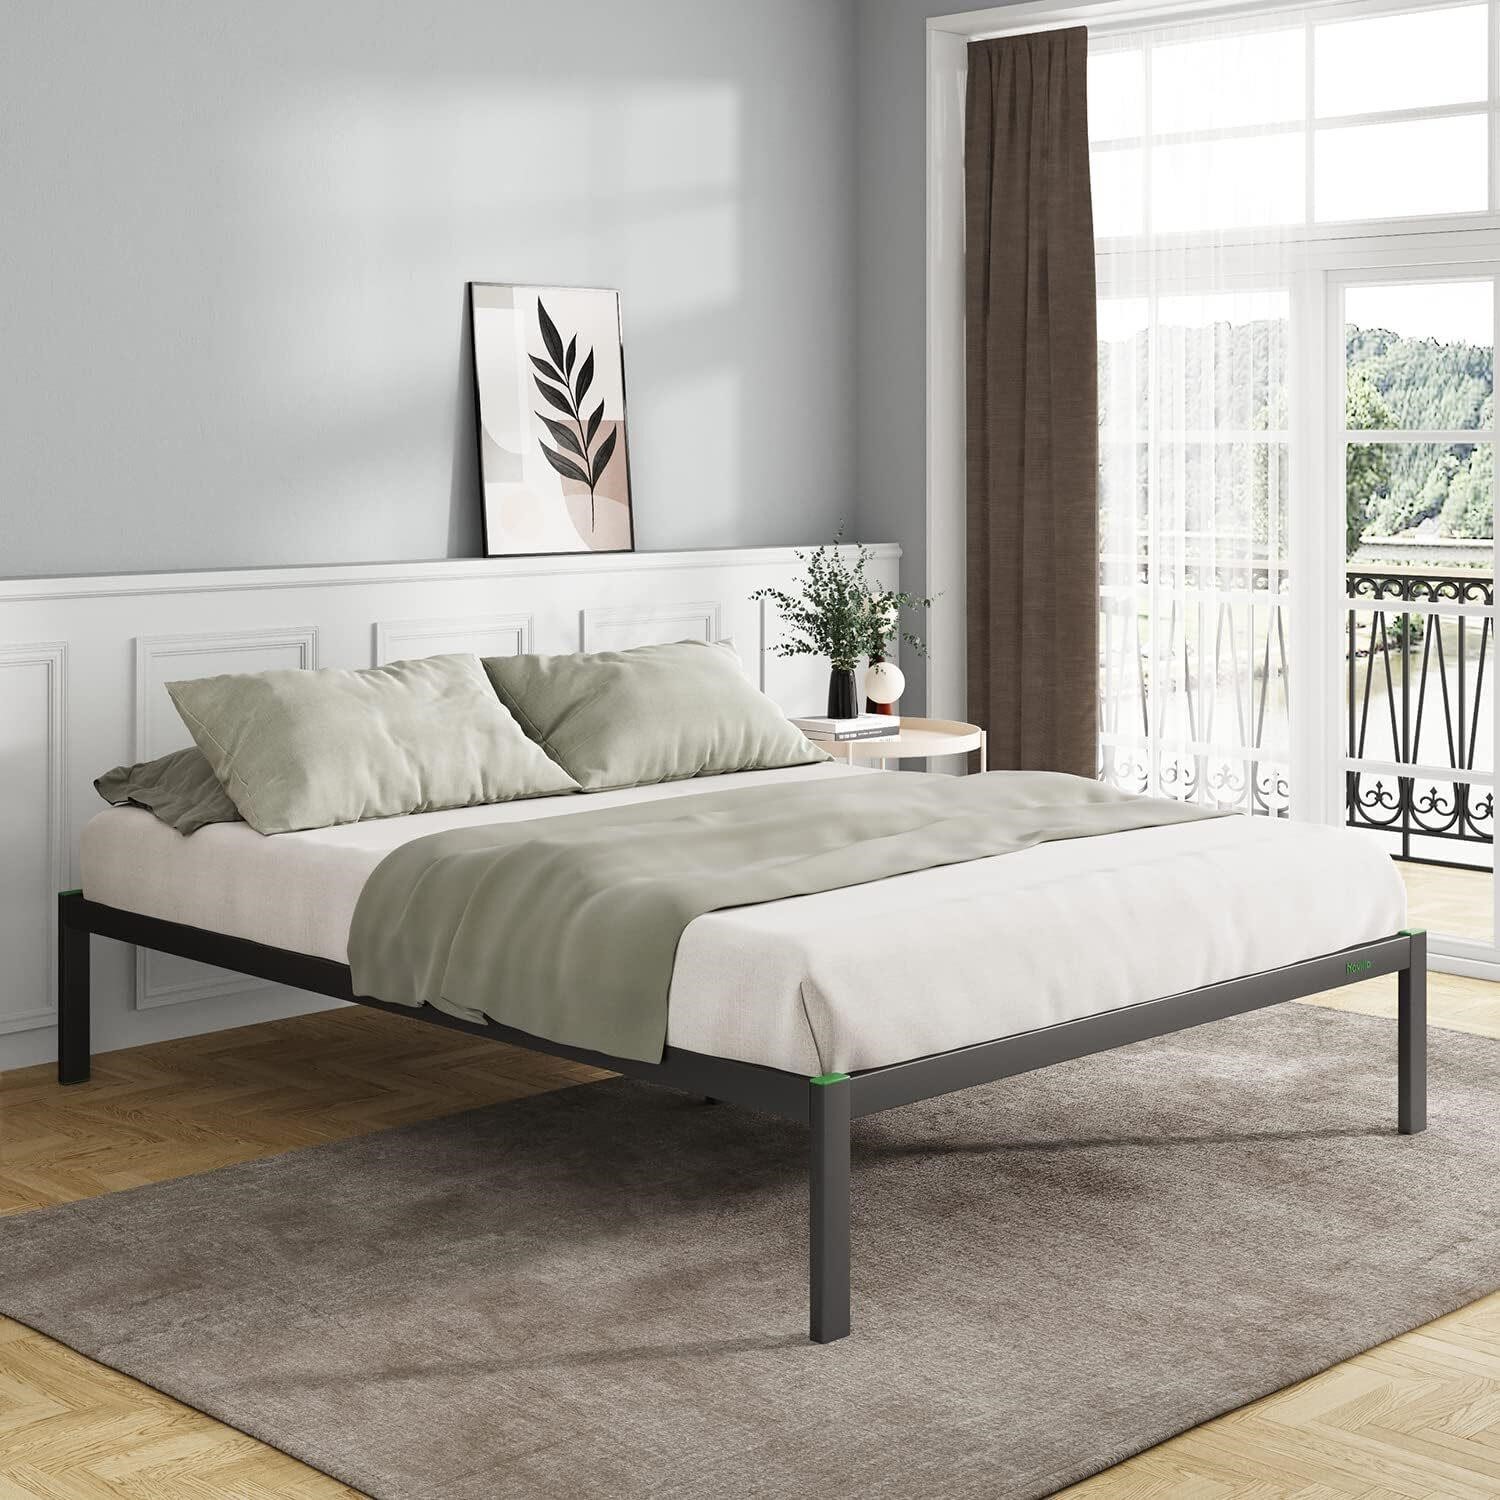 Novilla 14 King Size Bed Frame with Storage